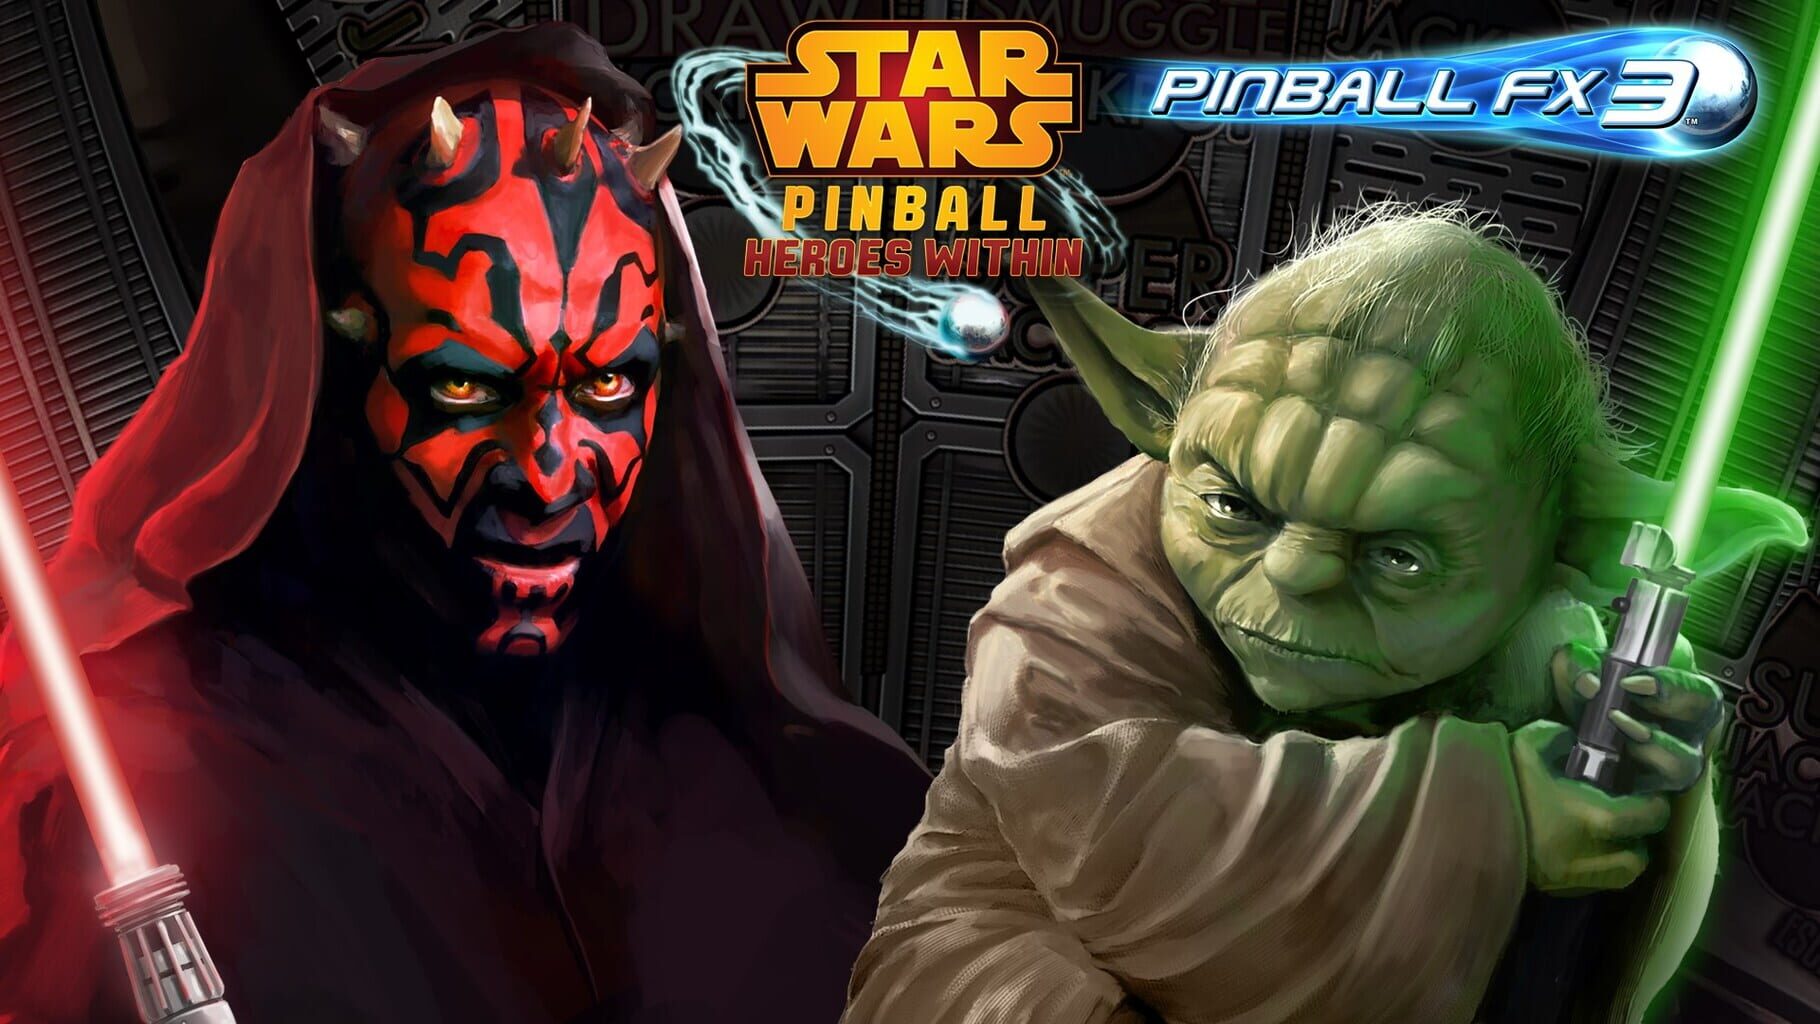 Arte - Pinball FX3: Star Wars Pinball - Heroes Within